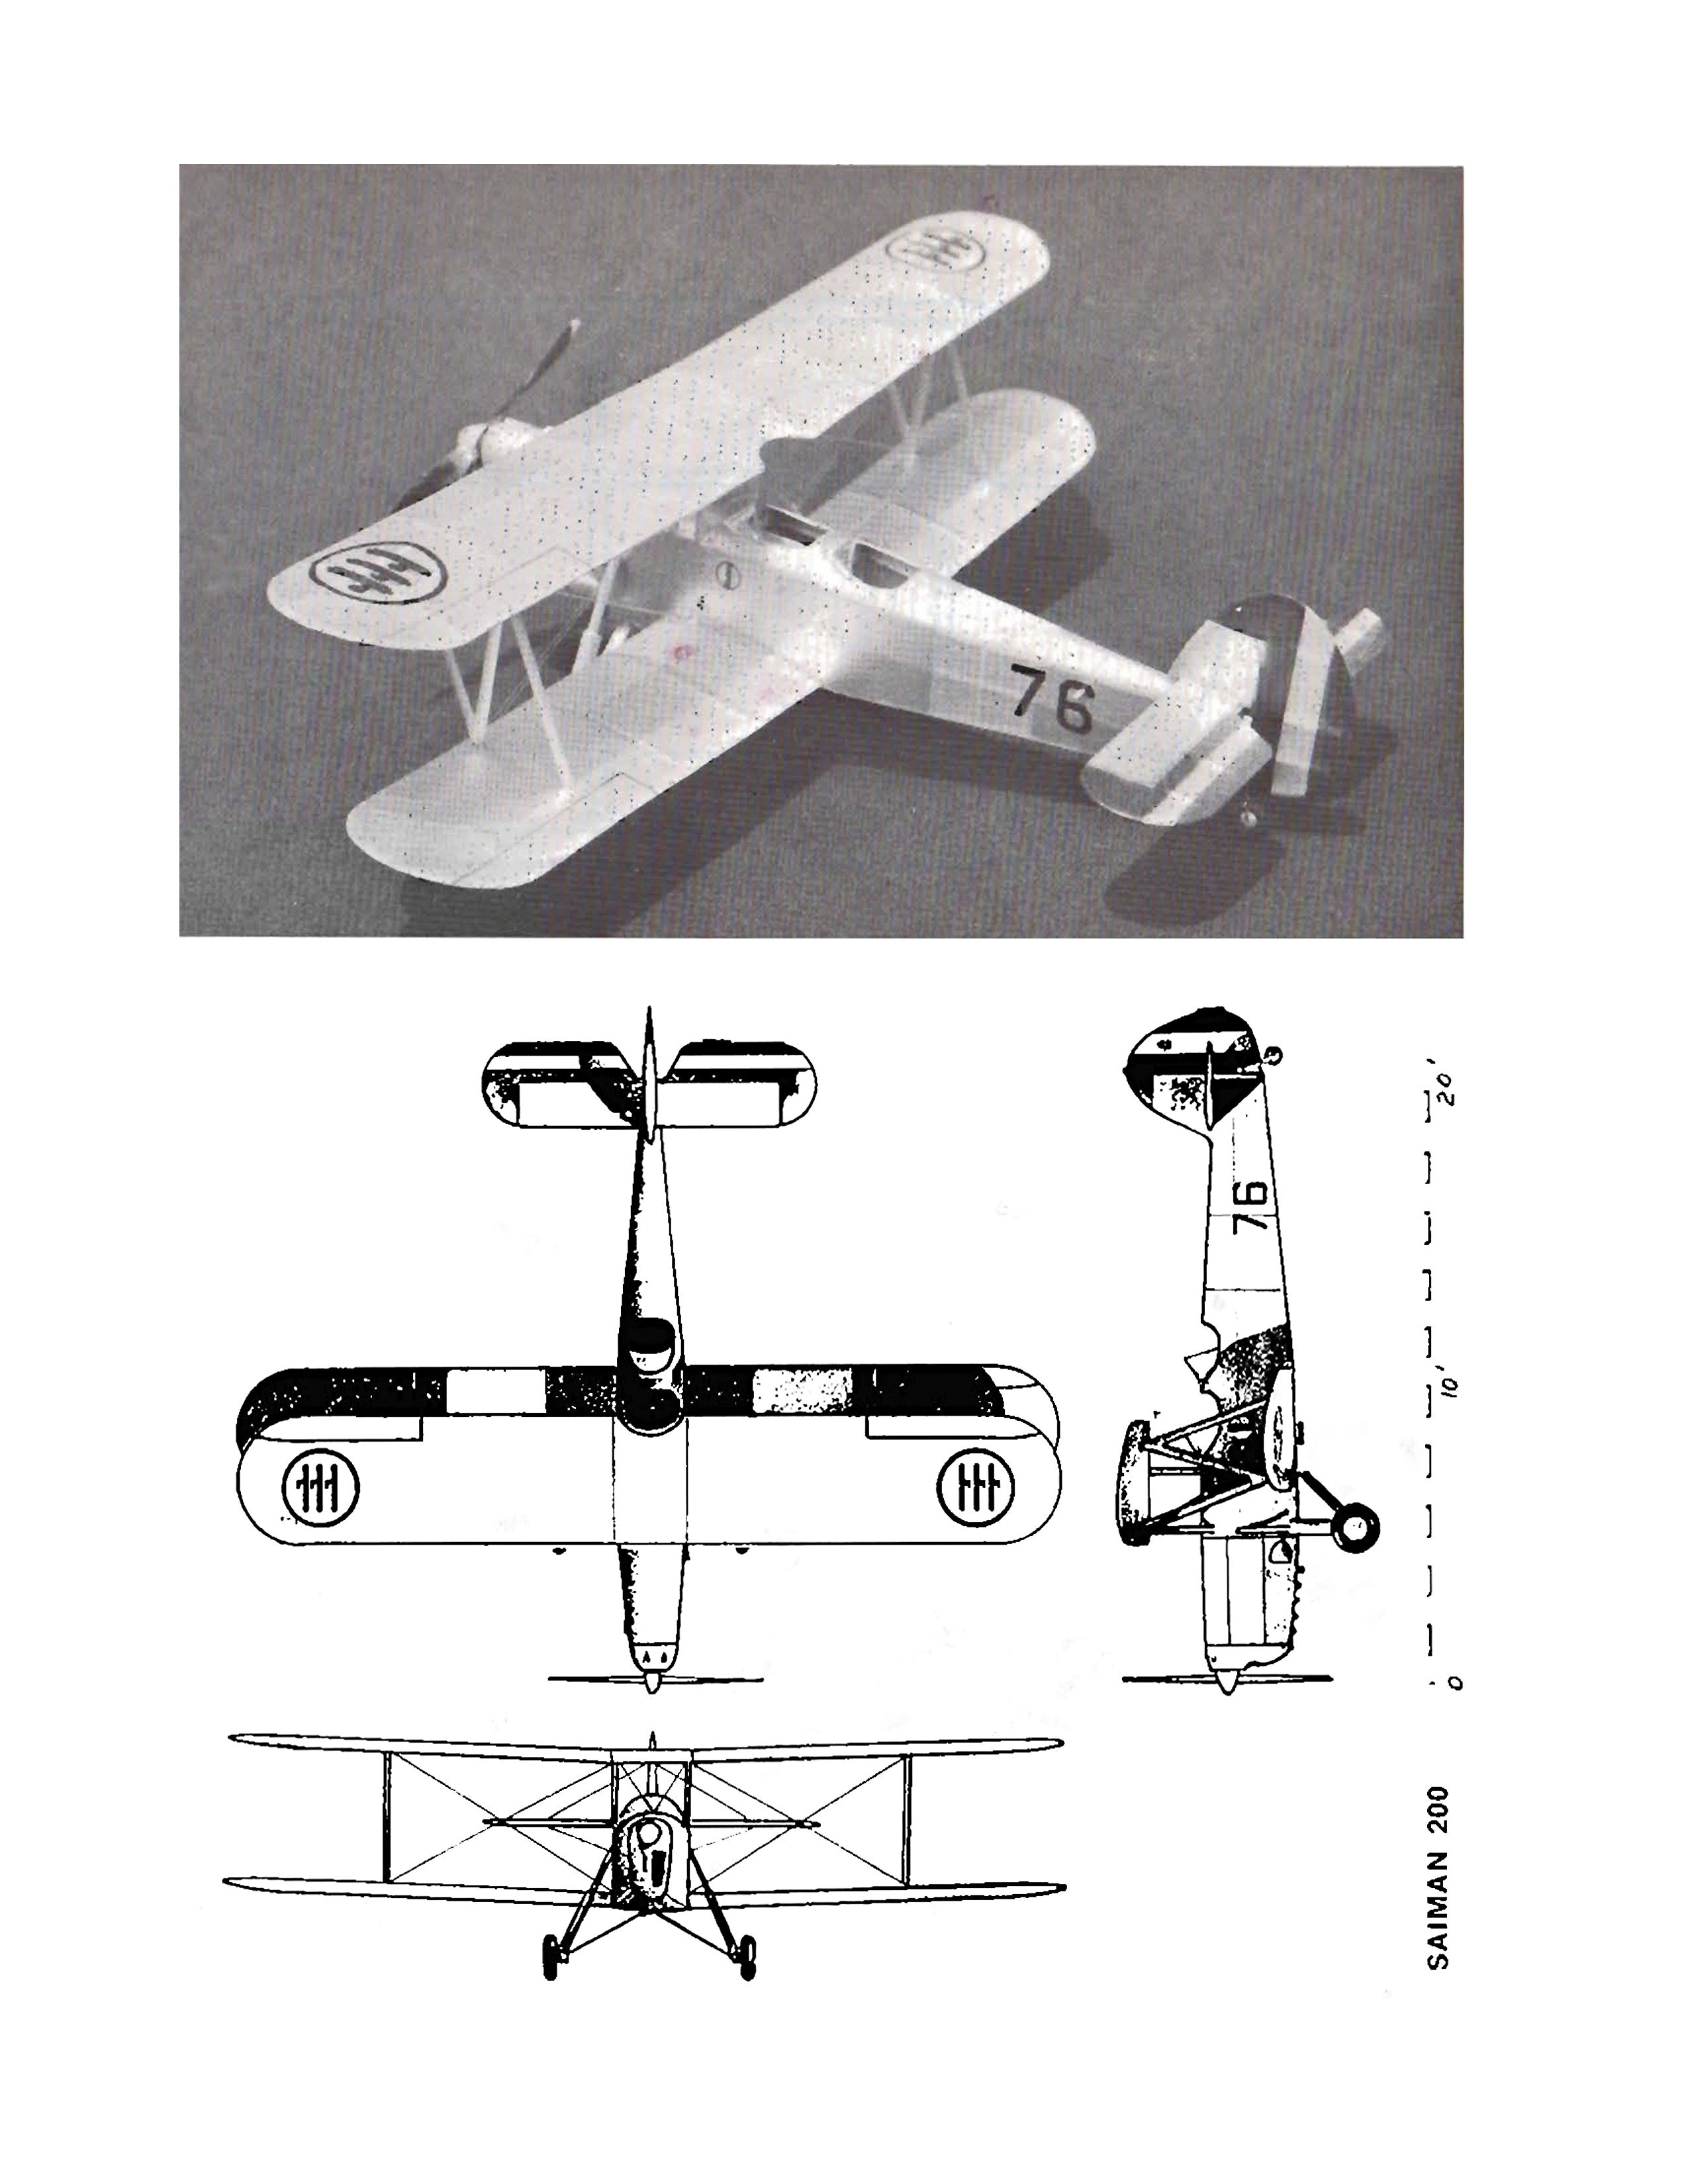 full size printed plans peanut scale saiman 200 one of the prettiest biplane trainers of the world war ii era.